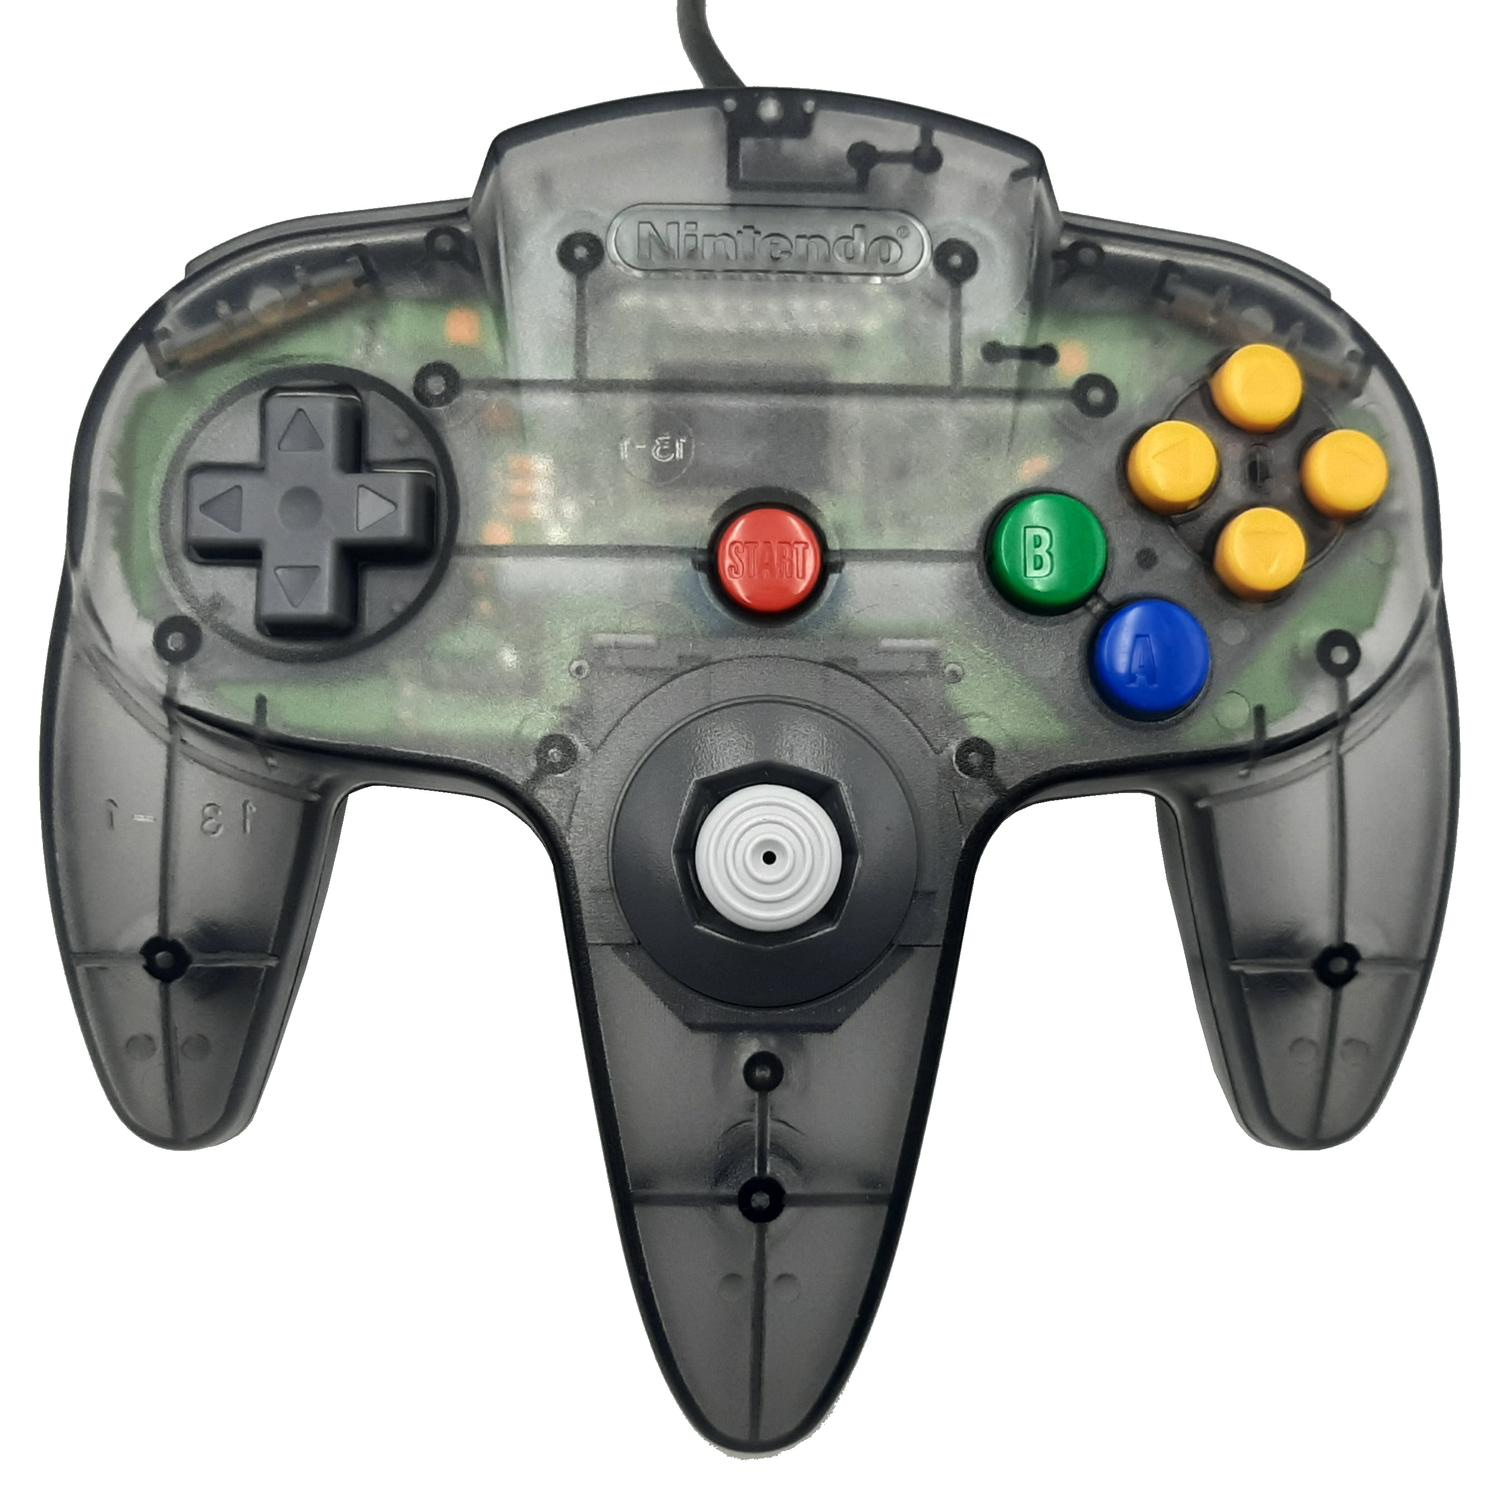 Nintendo 64 Smoke Grey Basenhet